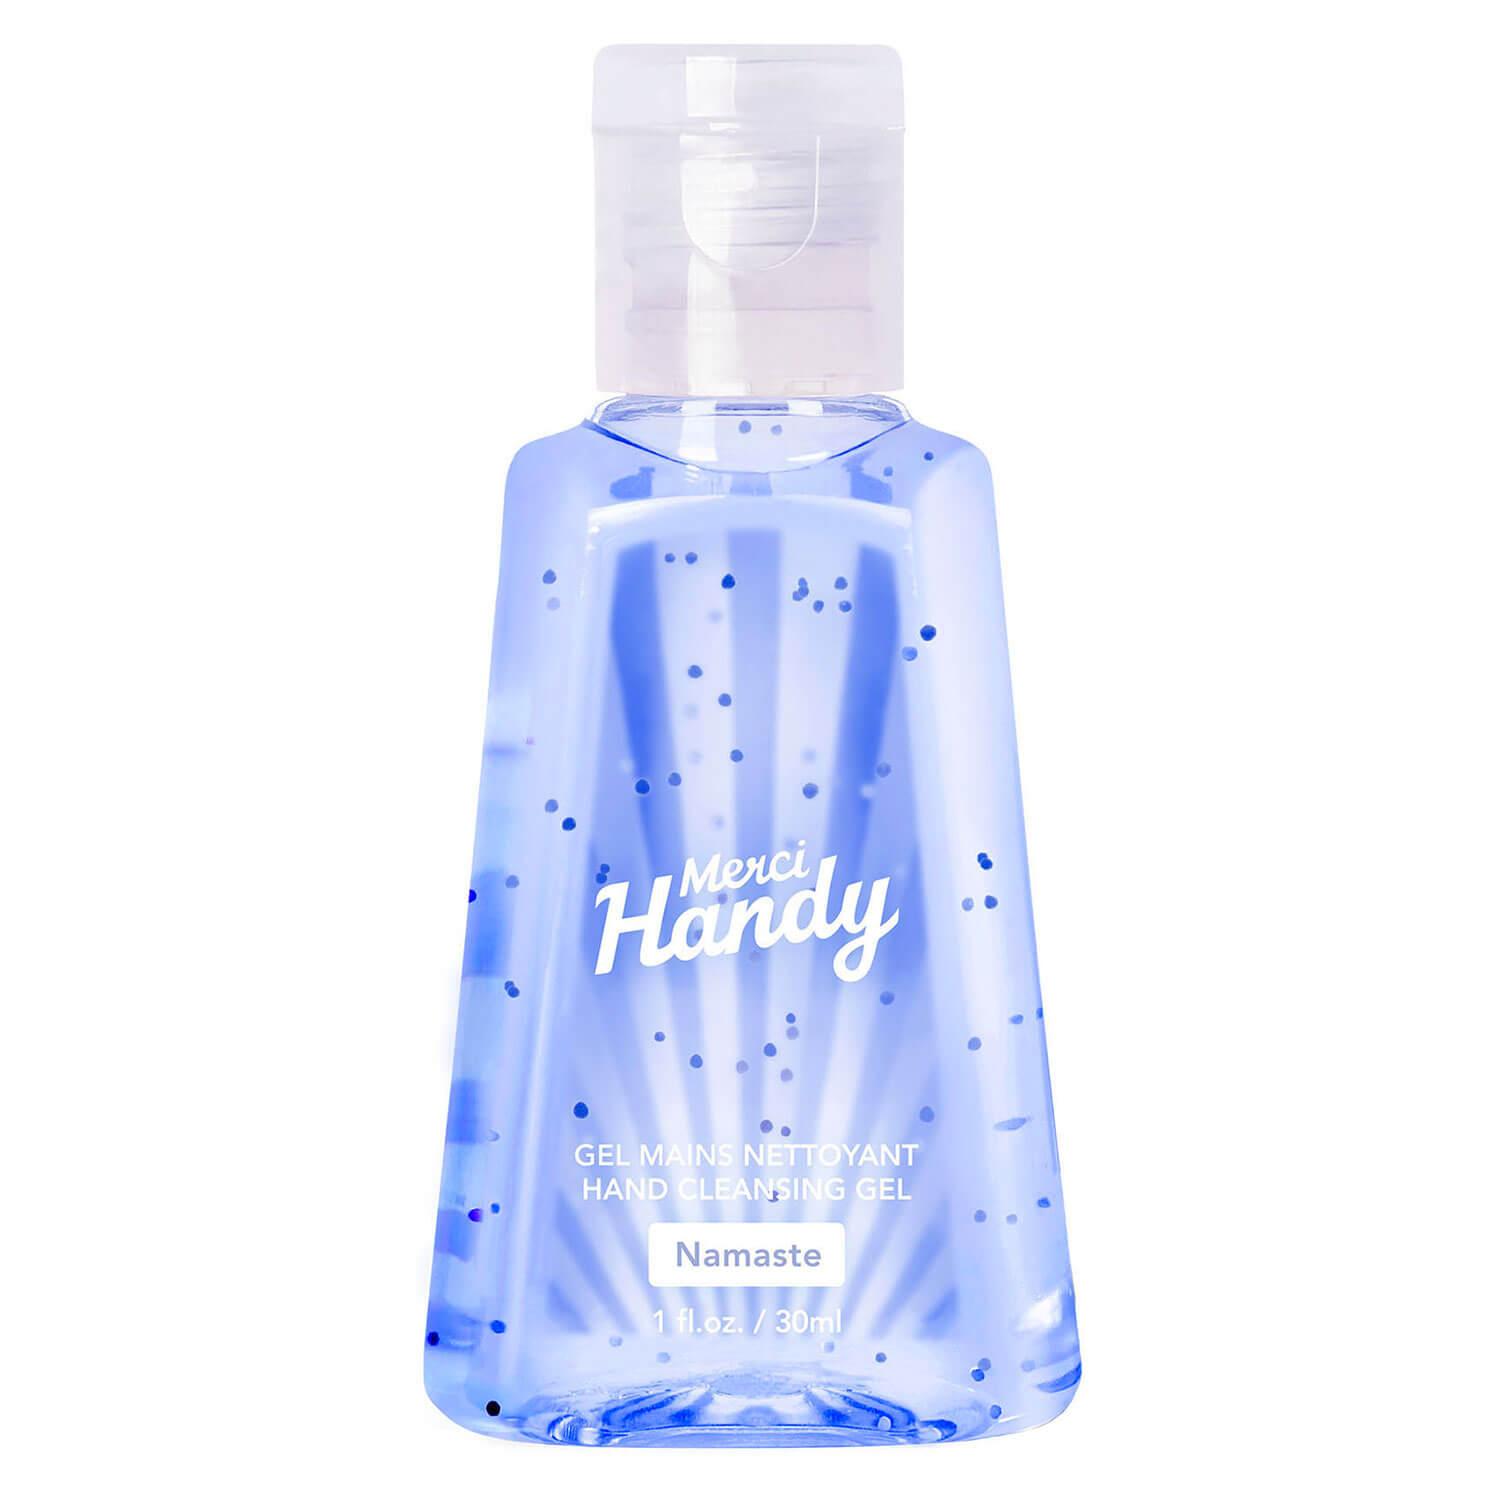 Merci Handy - Hand Cleansing Gel Namaste